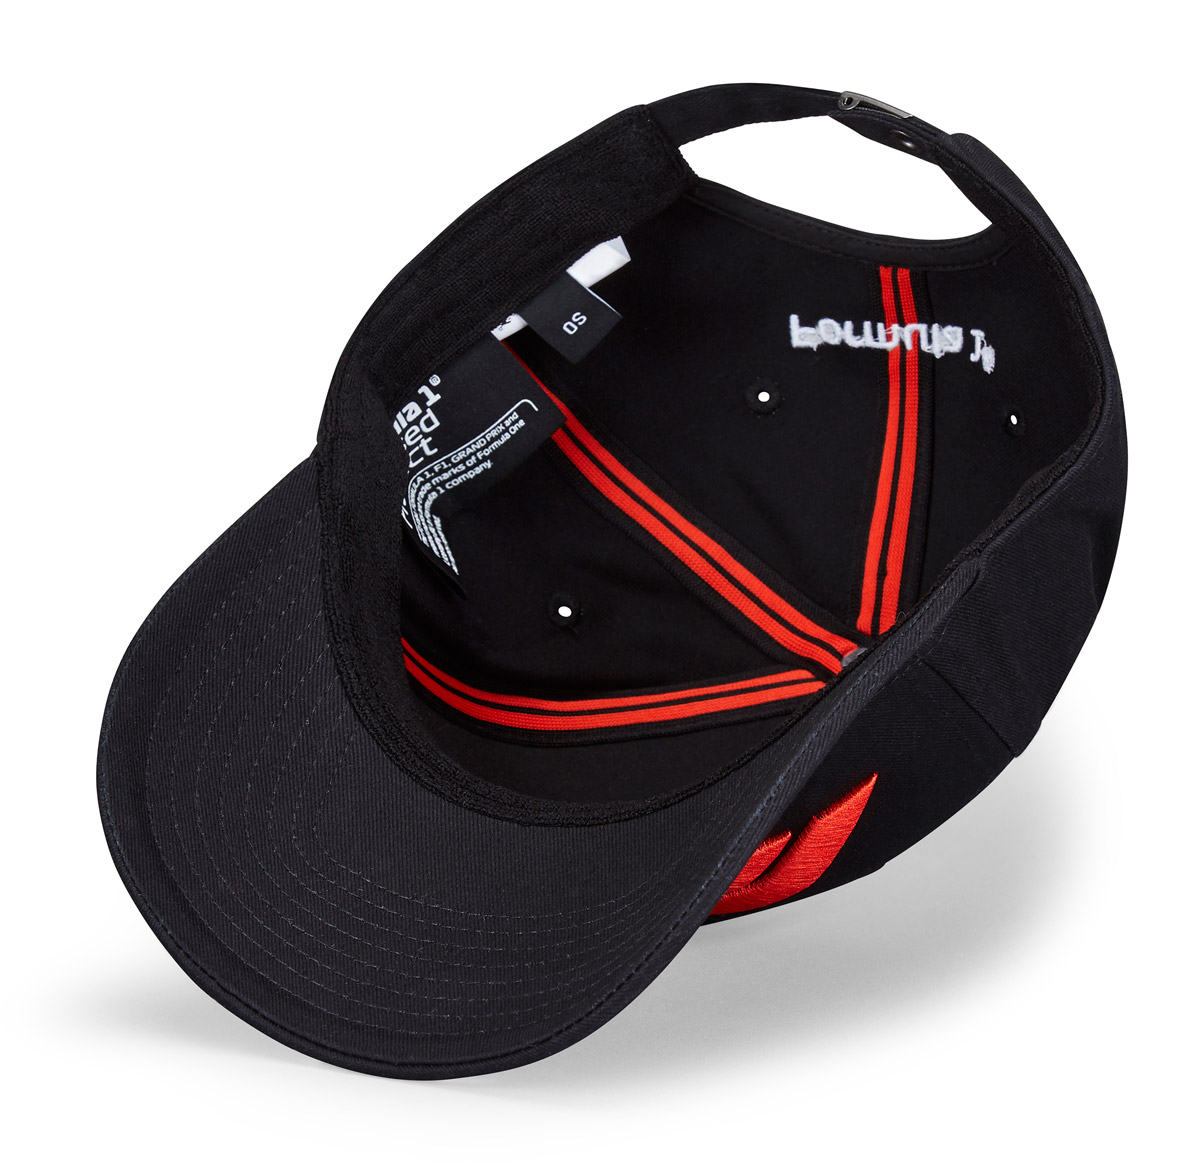 F1 collection cap "Logo" - black